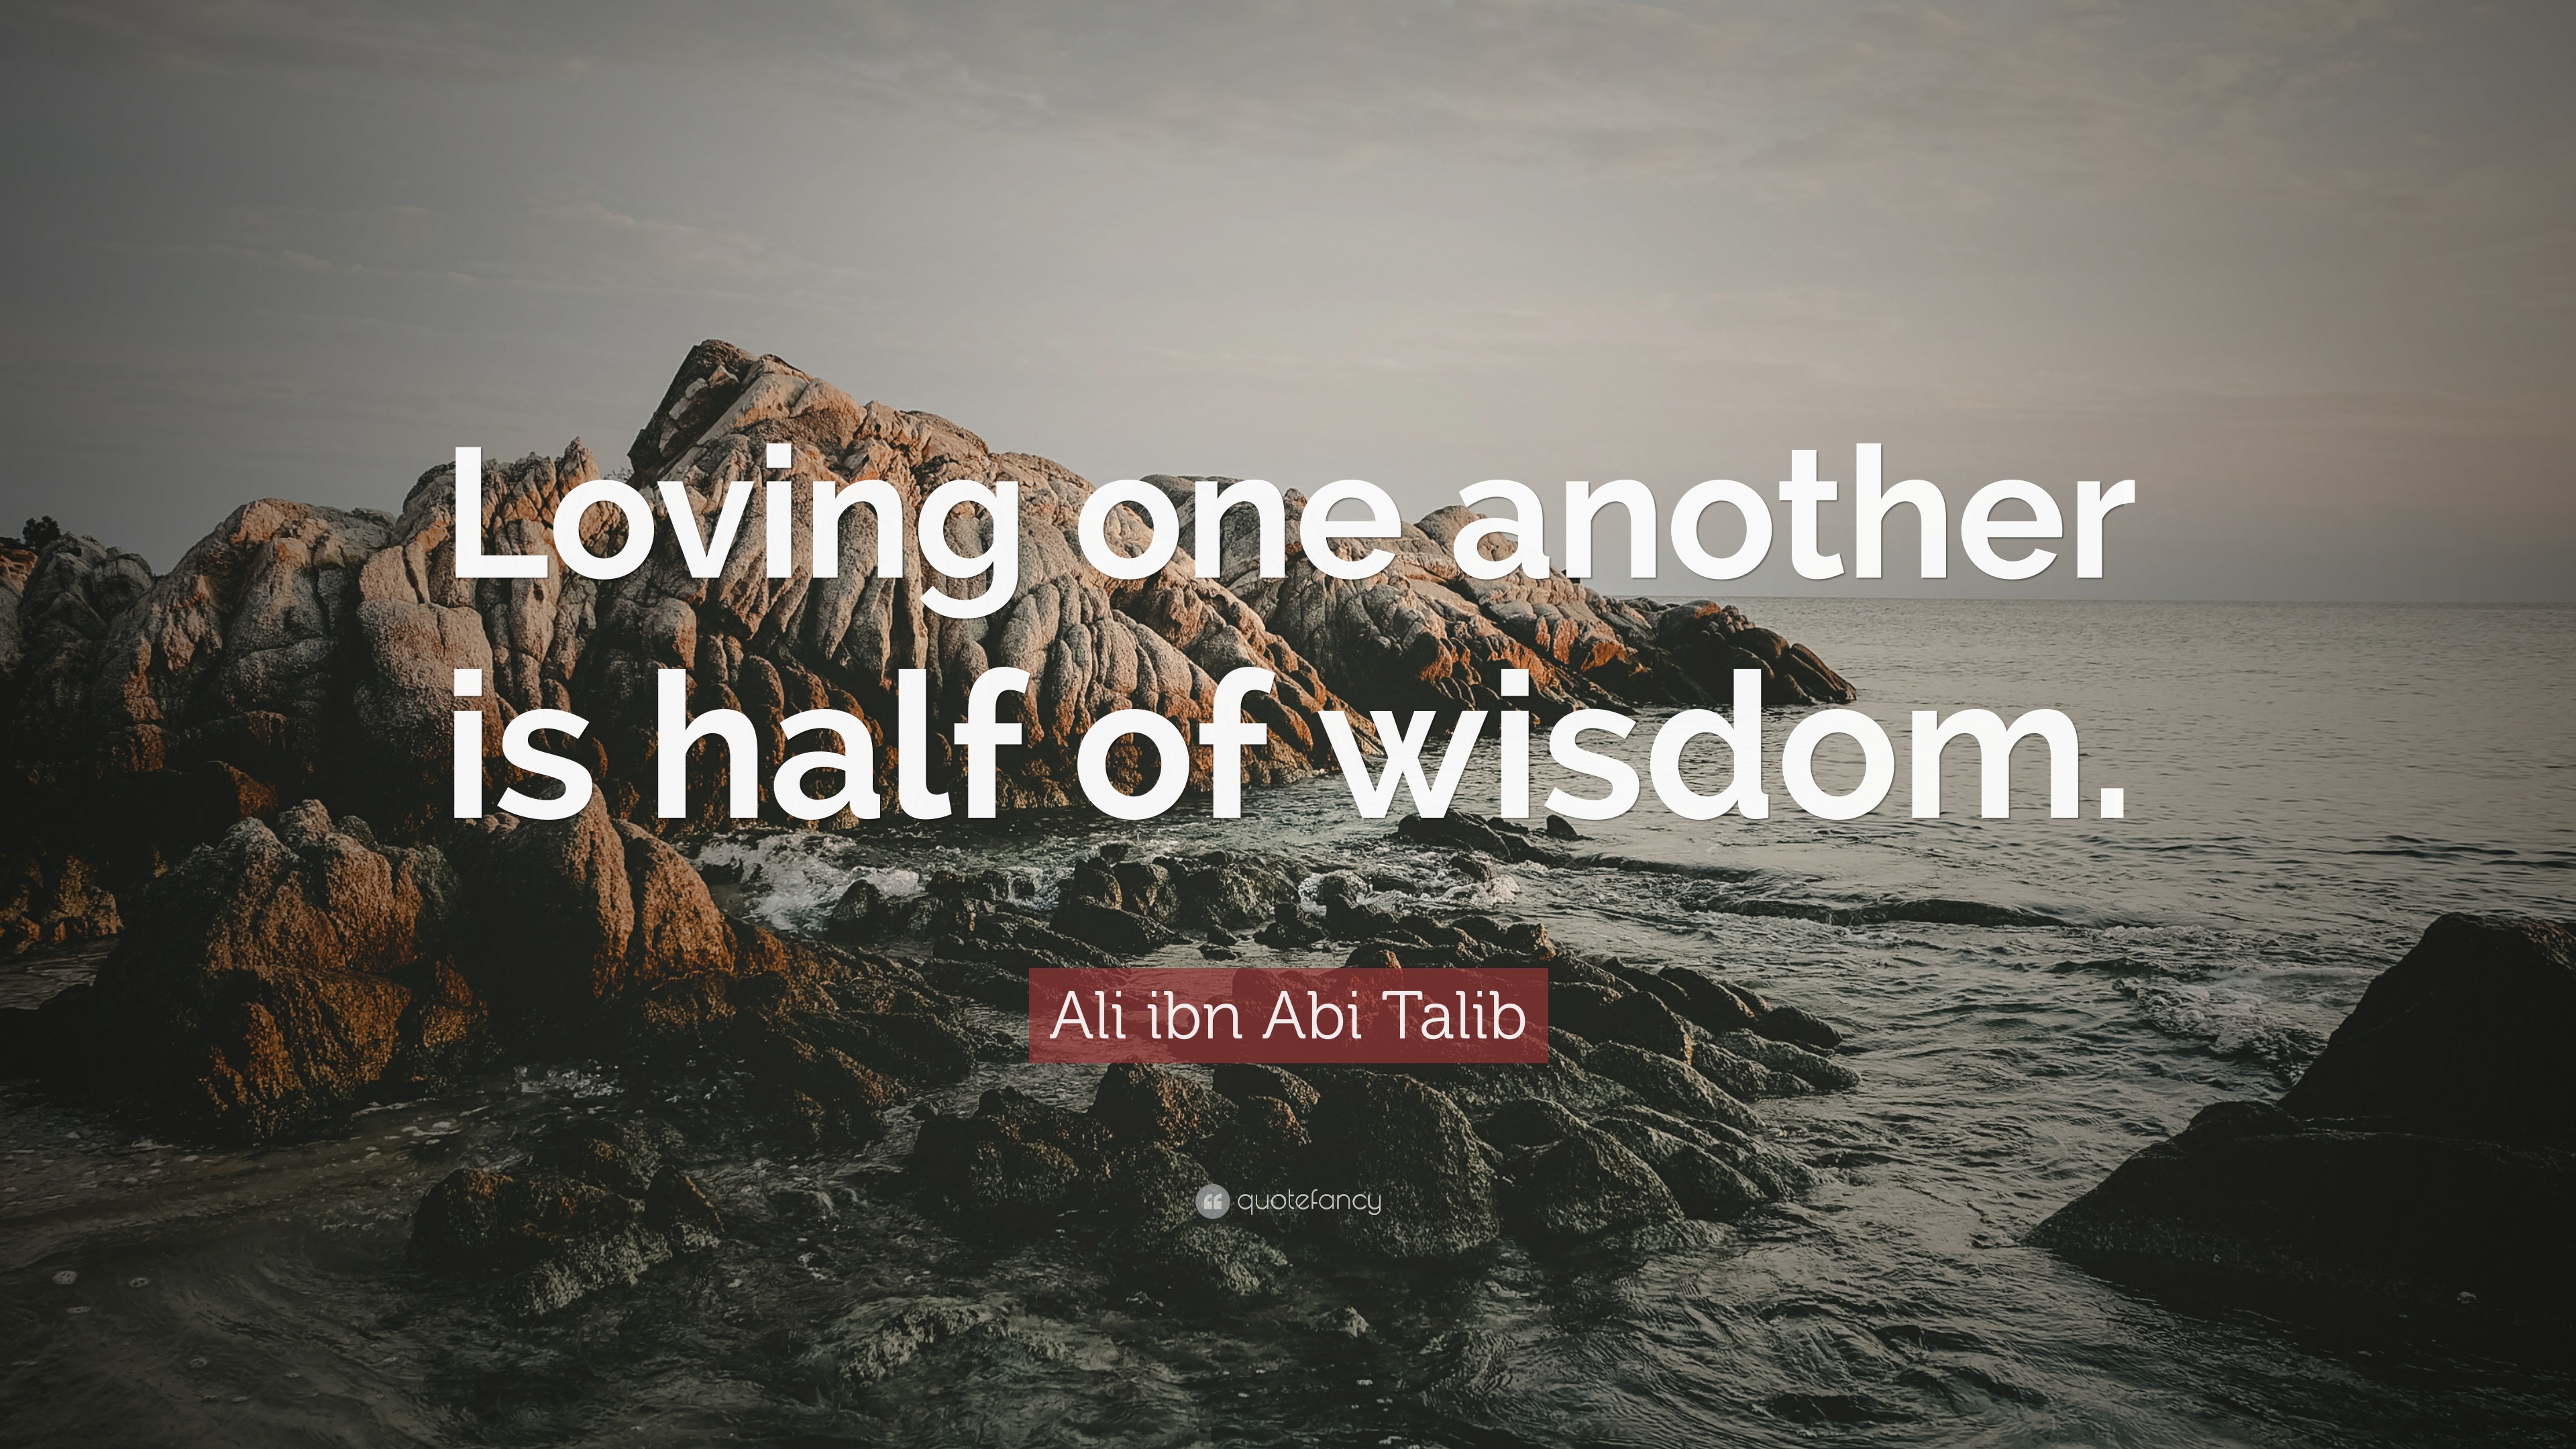 Ali ibn Abi Talib Quote “Loving one another is half of wisdom ”